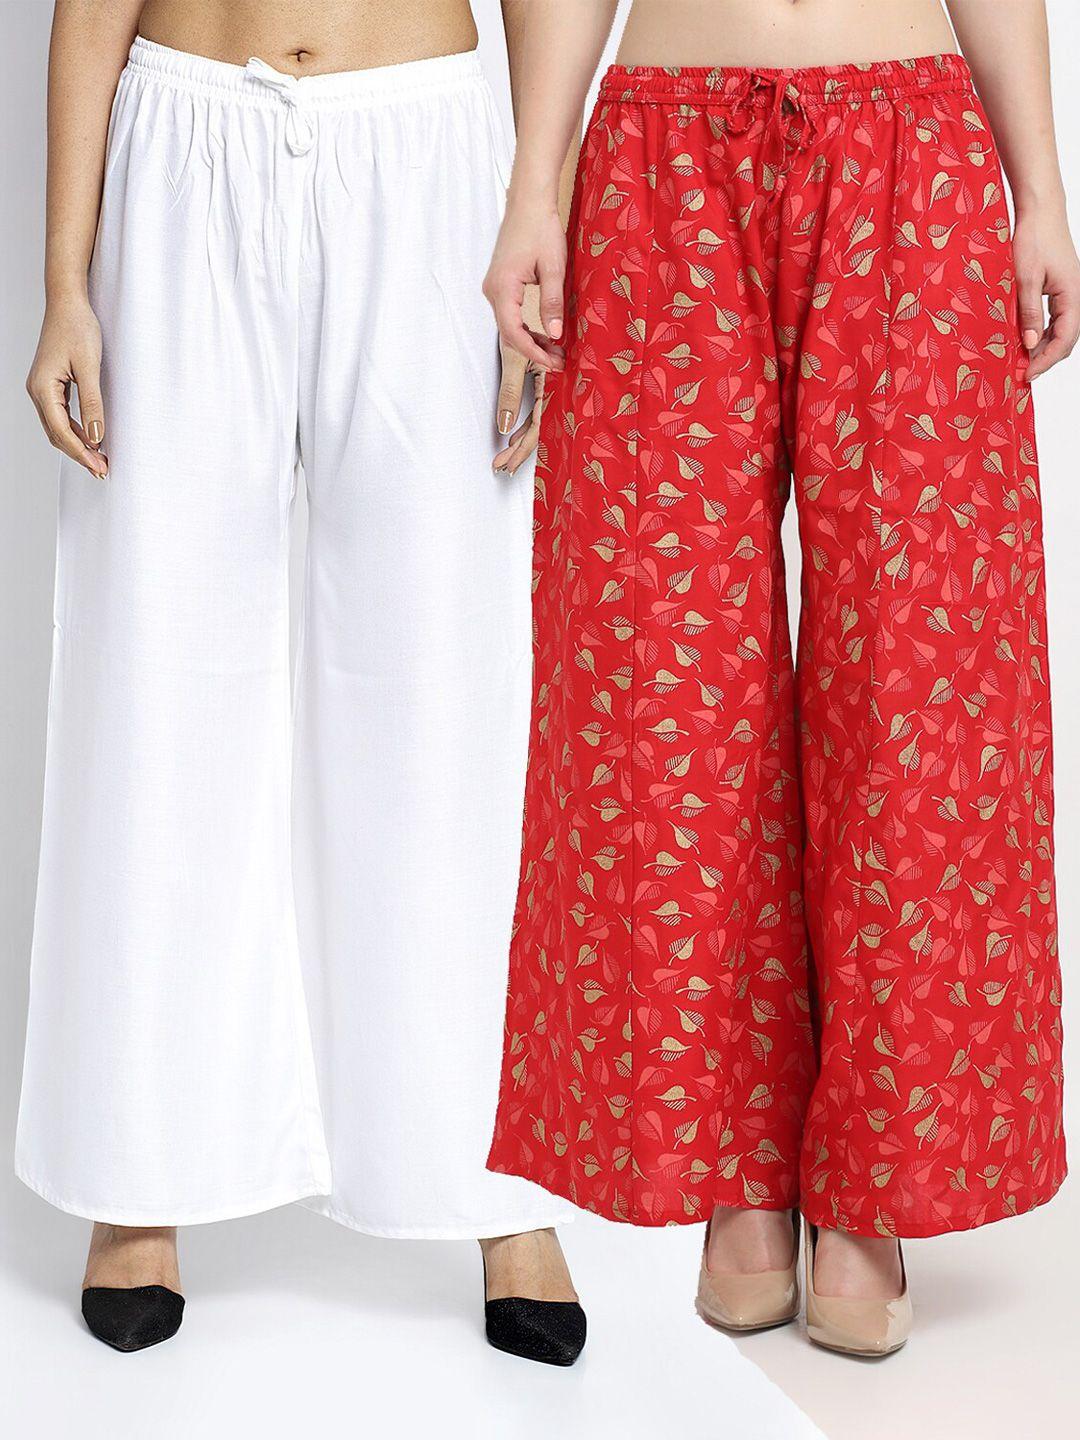 gracit women set of 2 white & red printed rayon palazzos